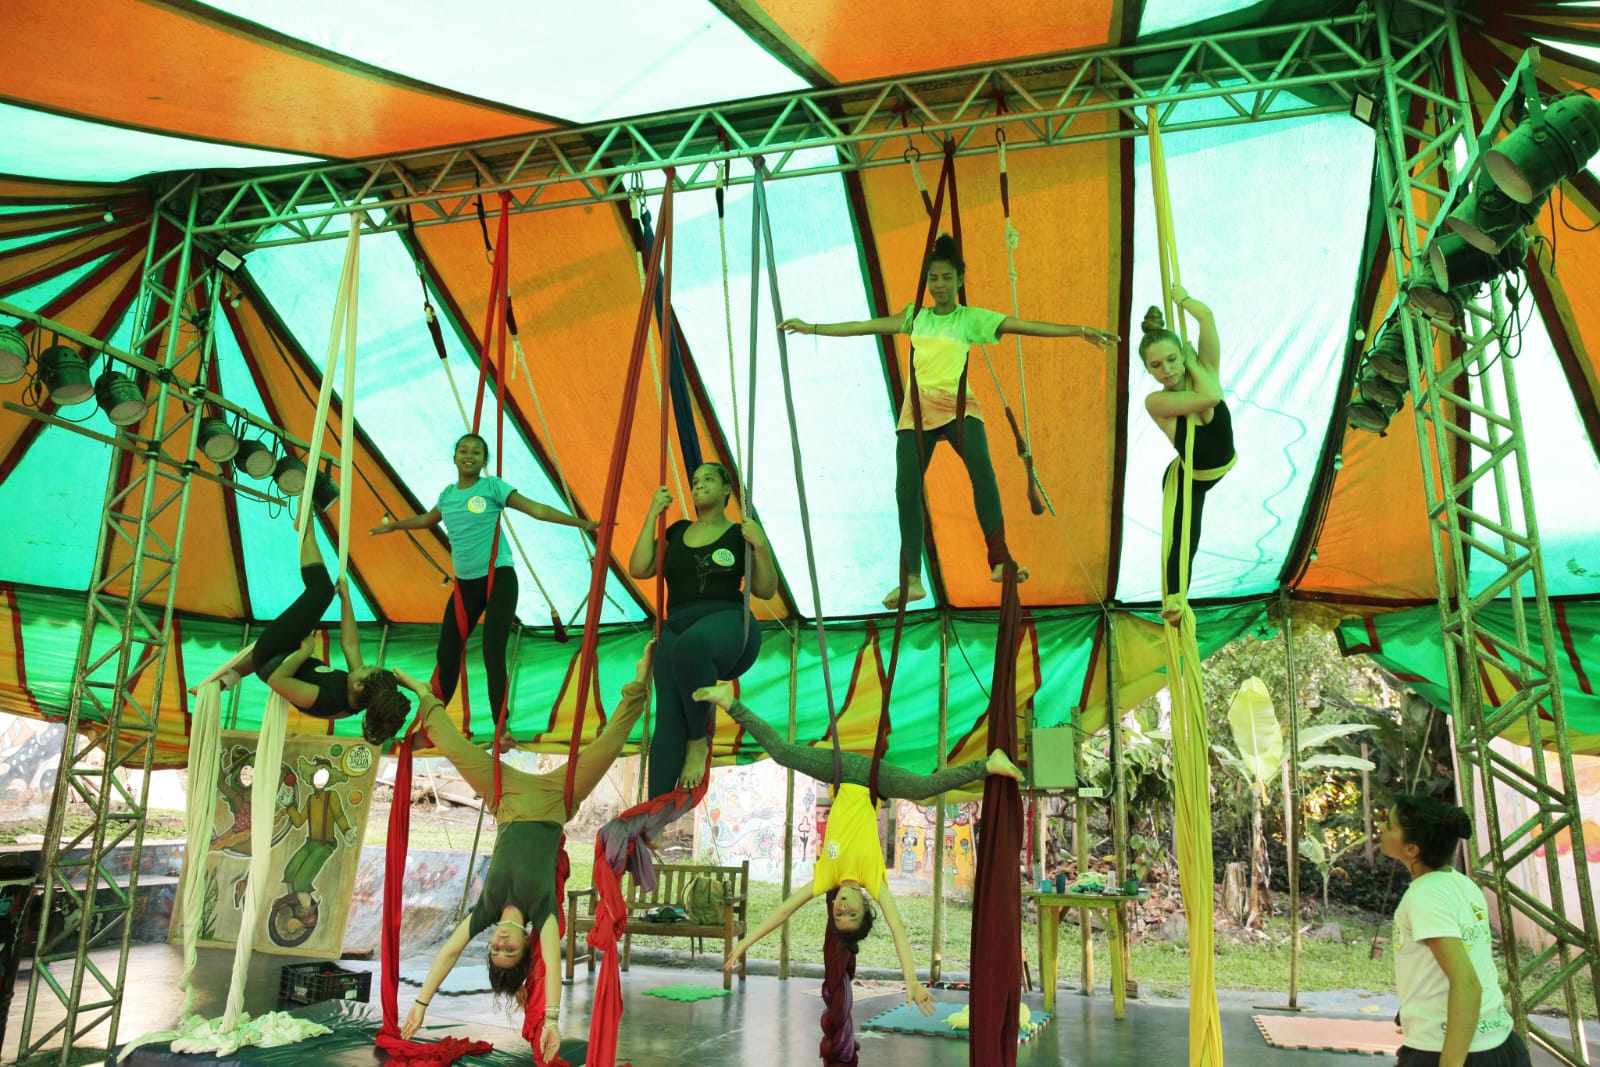 Circo da Lua guarantees education, art, and fun in Serra Grande, Bahia